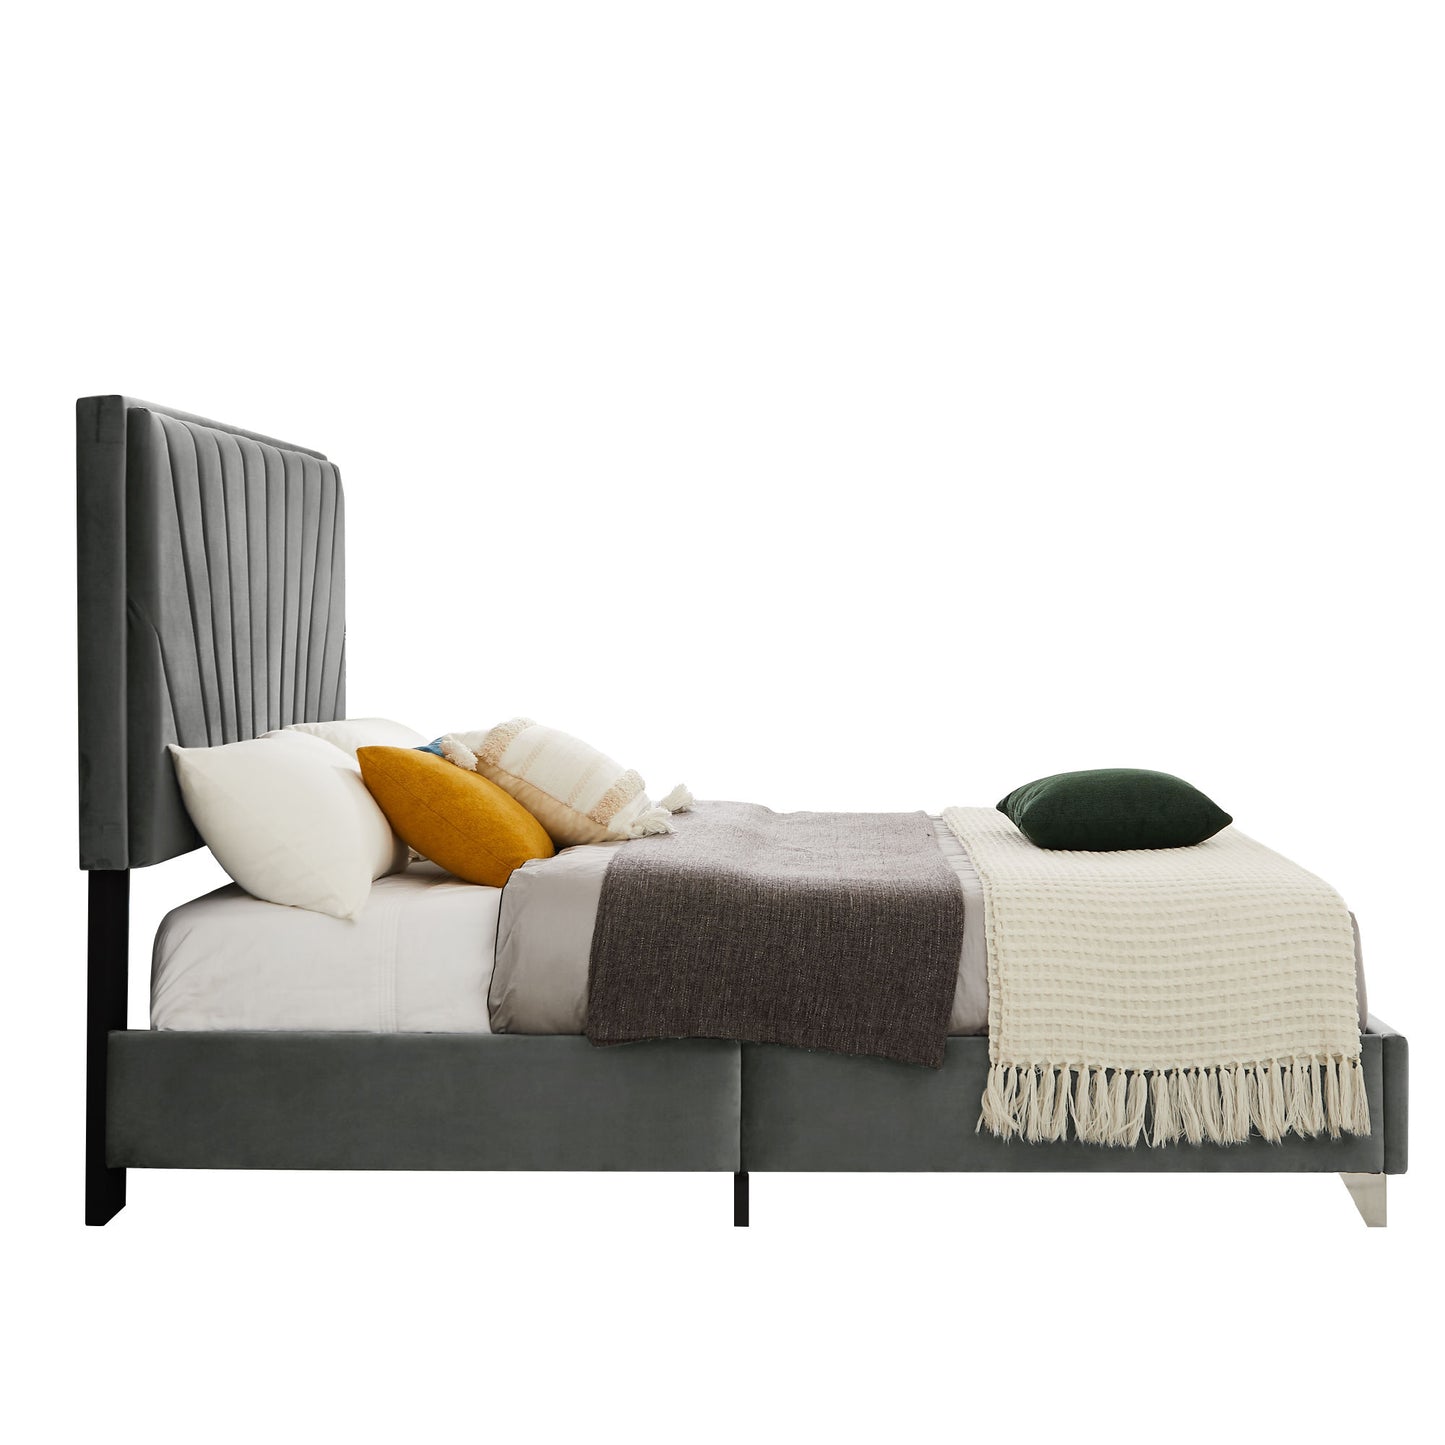 B108 Full bed Beautiful line stripe cushion headboard , strong wooden slats + metal support feet, Gray Flannelette